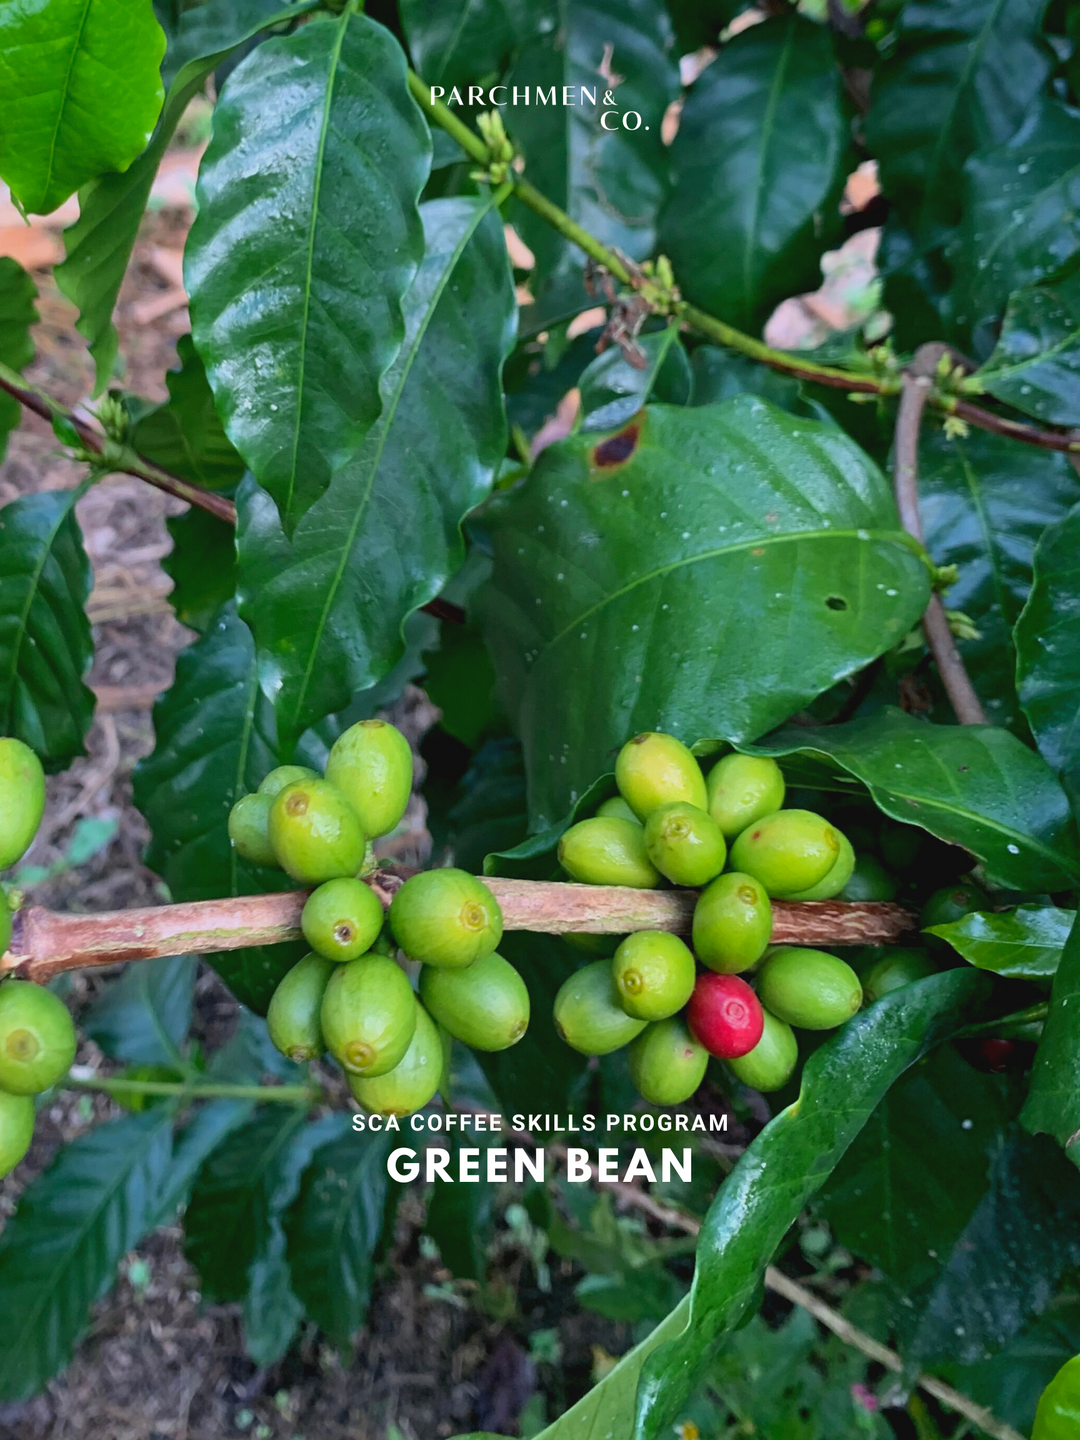 Specialty Coffee Association (SCA) Coffee Skills Program - Green Coffee